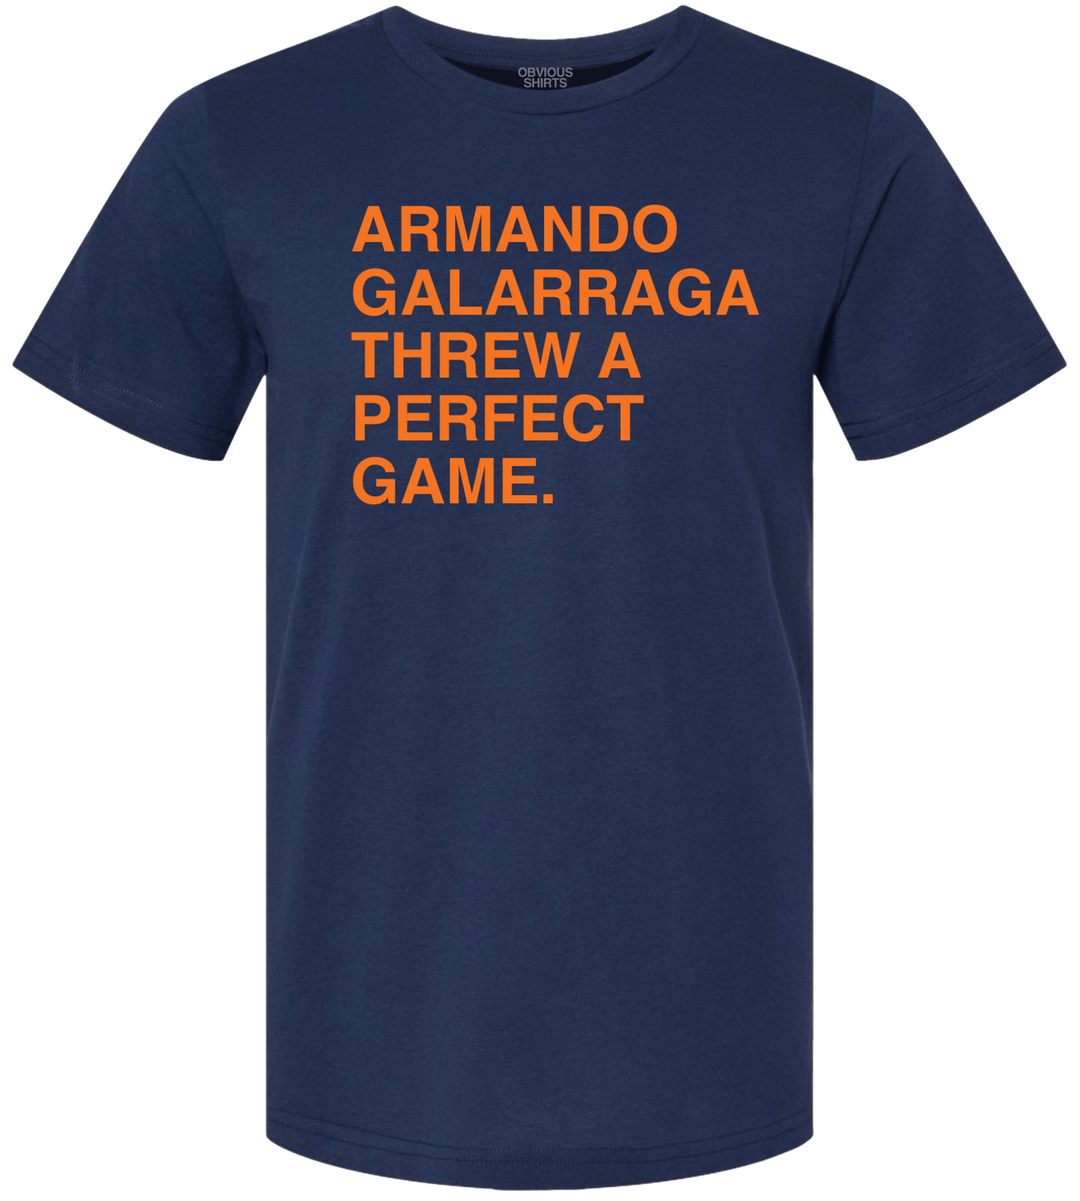 ARMANDO GALARRAGA THREW A PERFECT GAME. - OBVIOUS SHIRTS